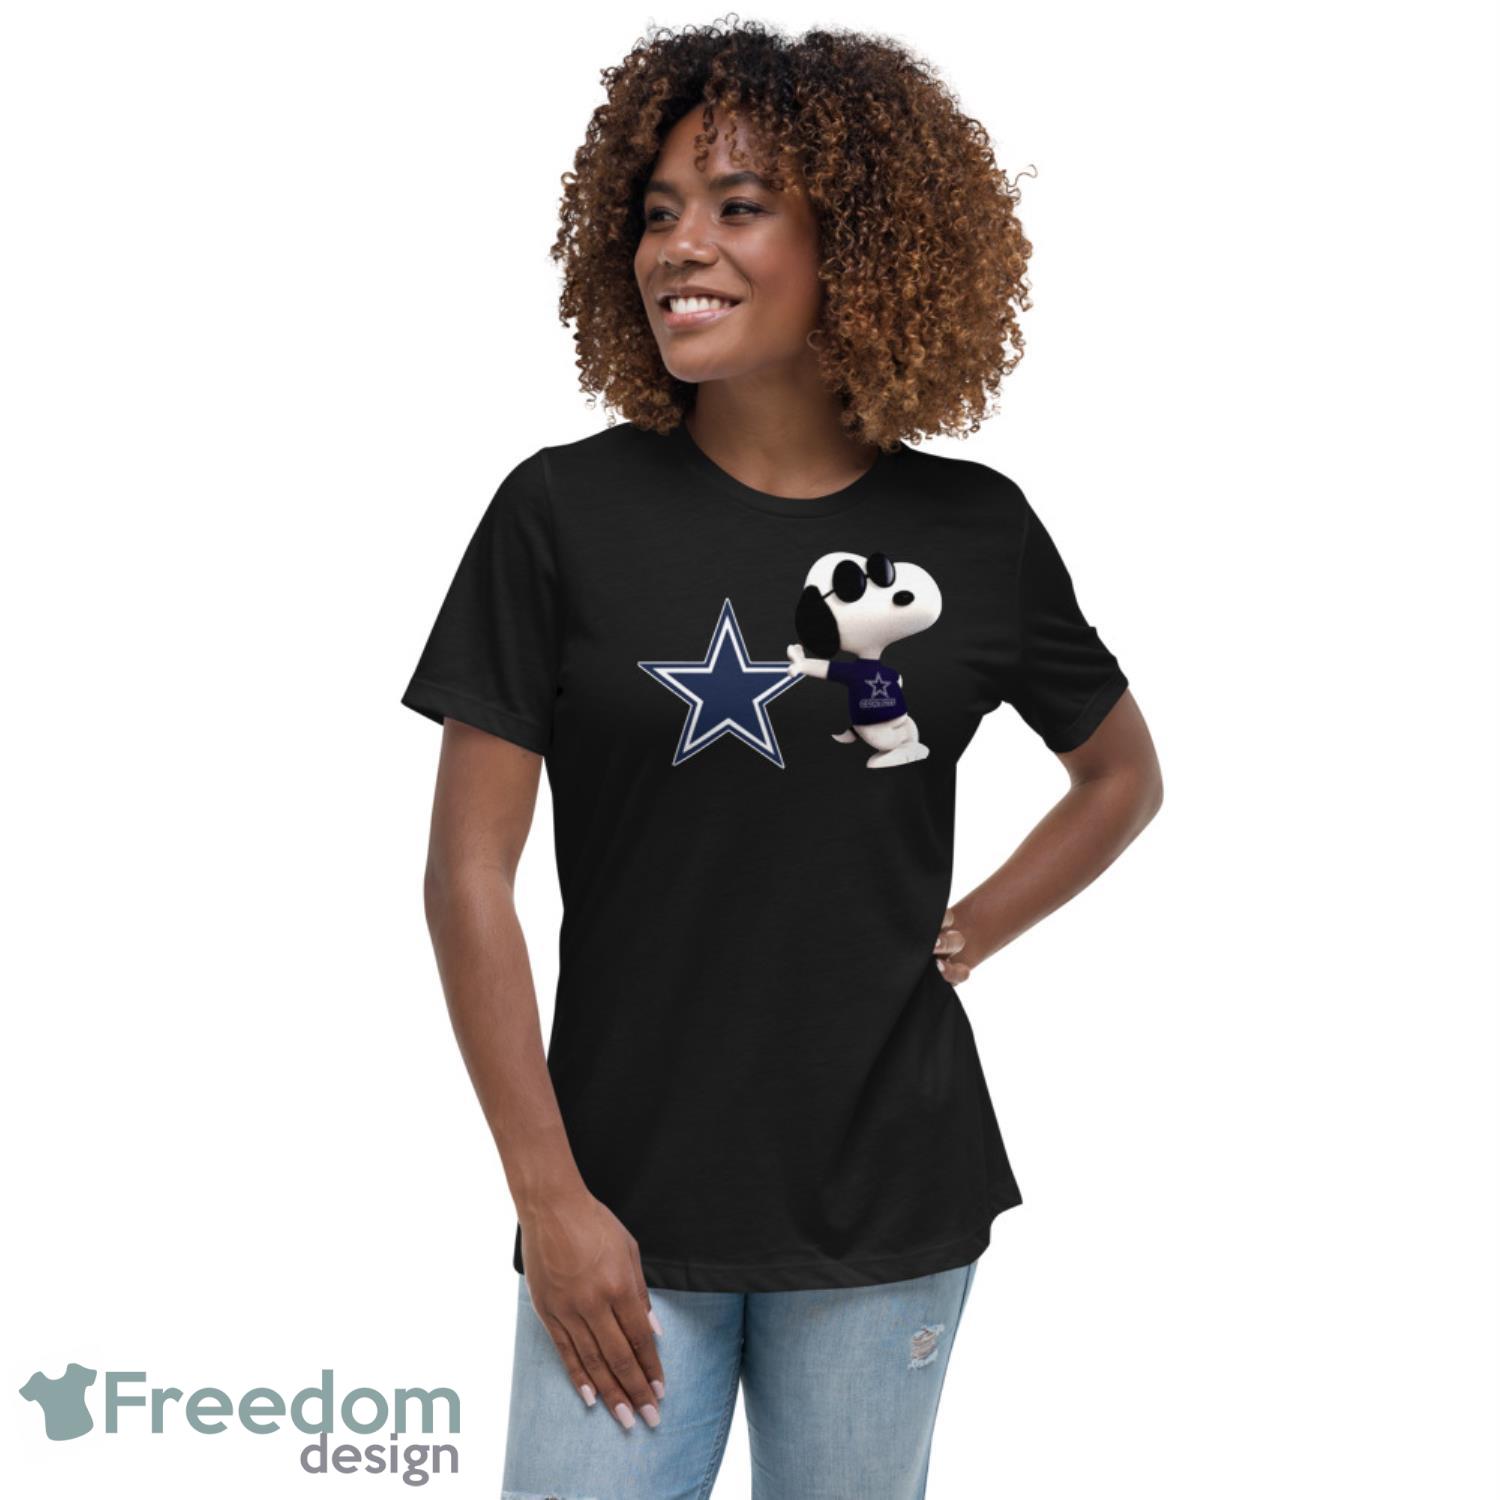 NFL Dallas Cowboys Logo And Snoopy Dog T Shirt